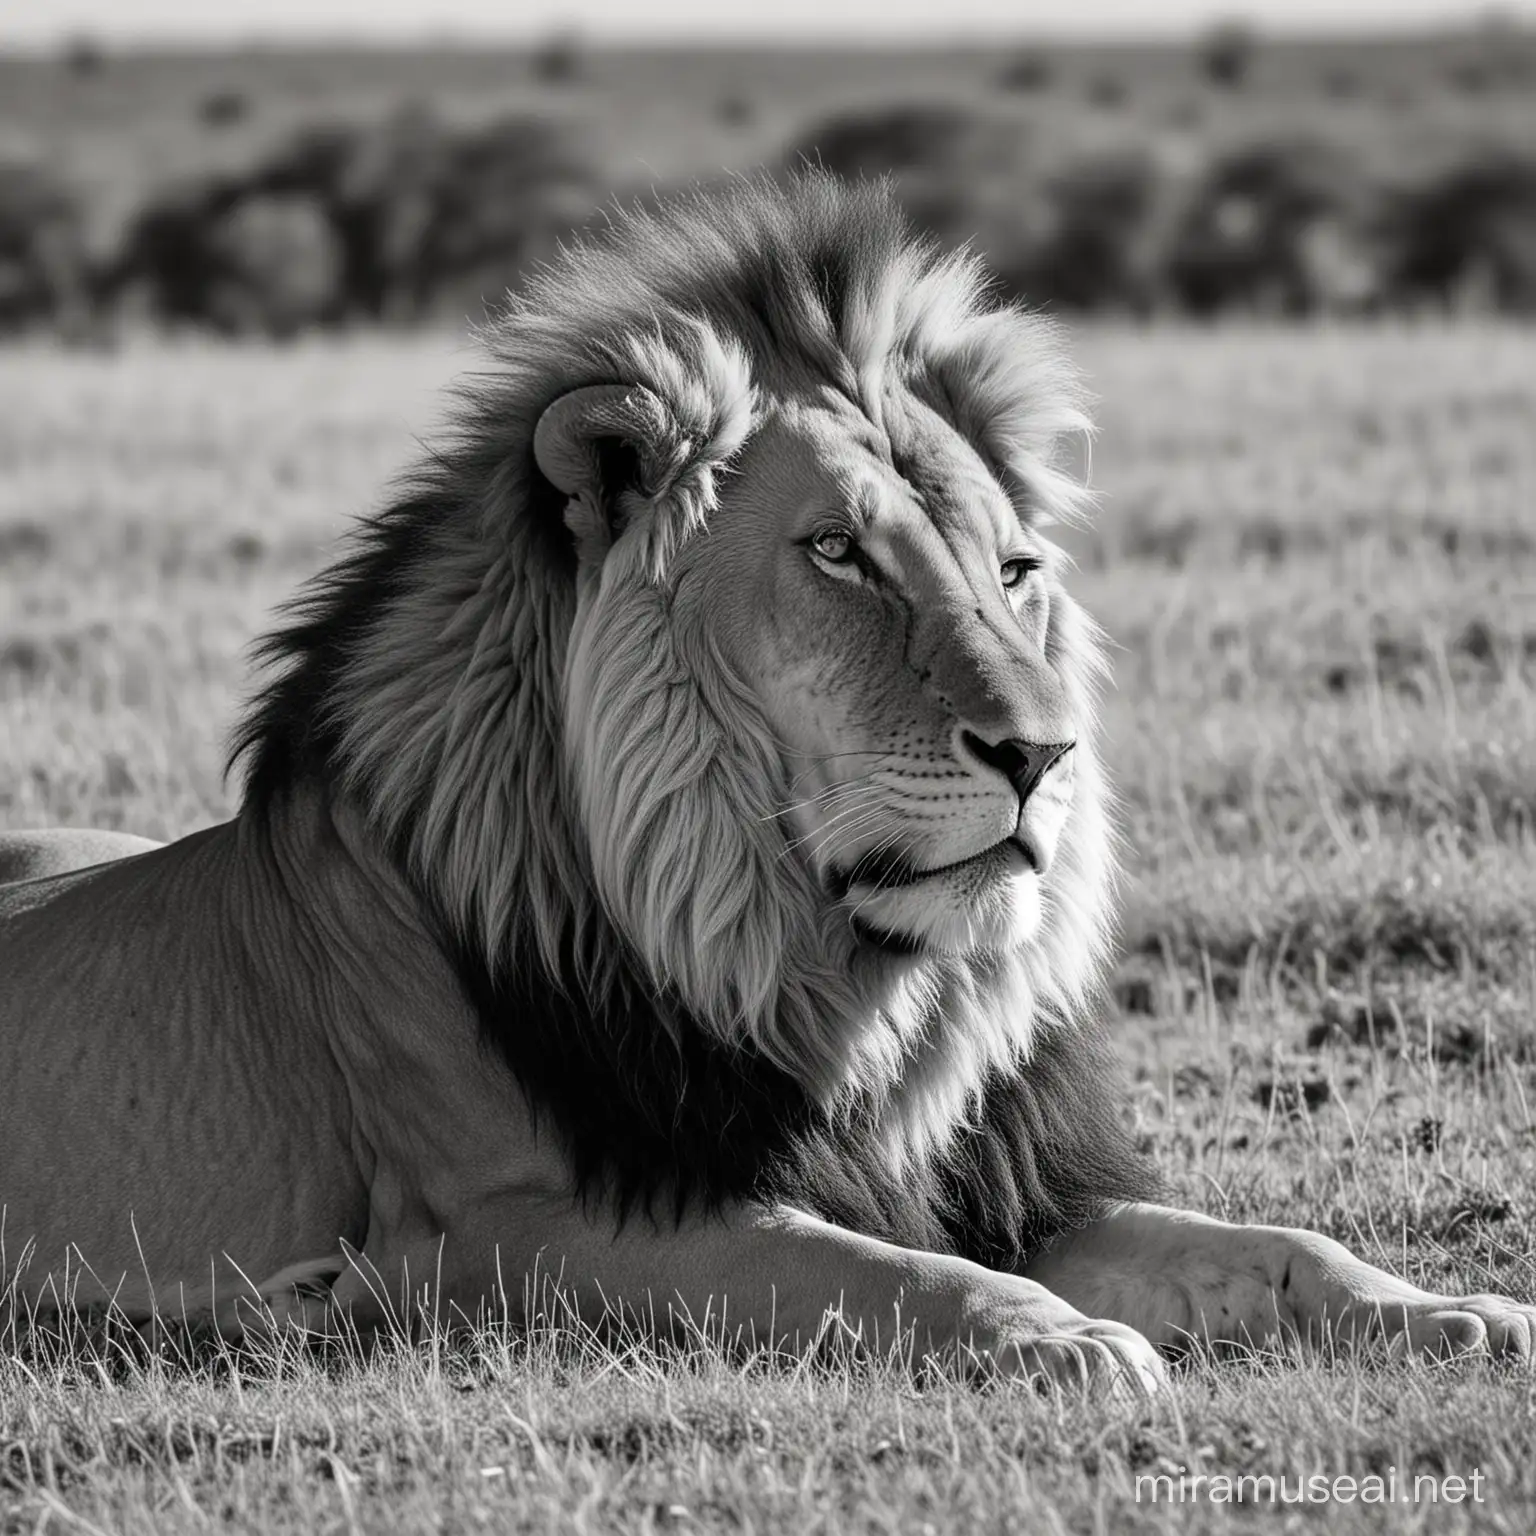 Majestic Lion Roaring on the Savannah in Monochrome